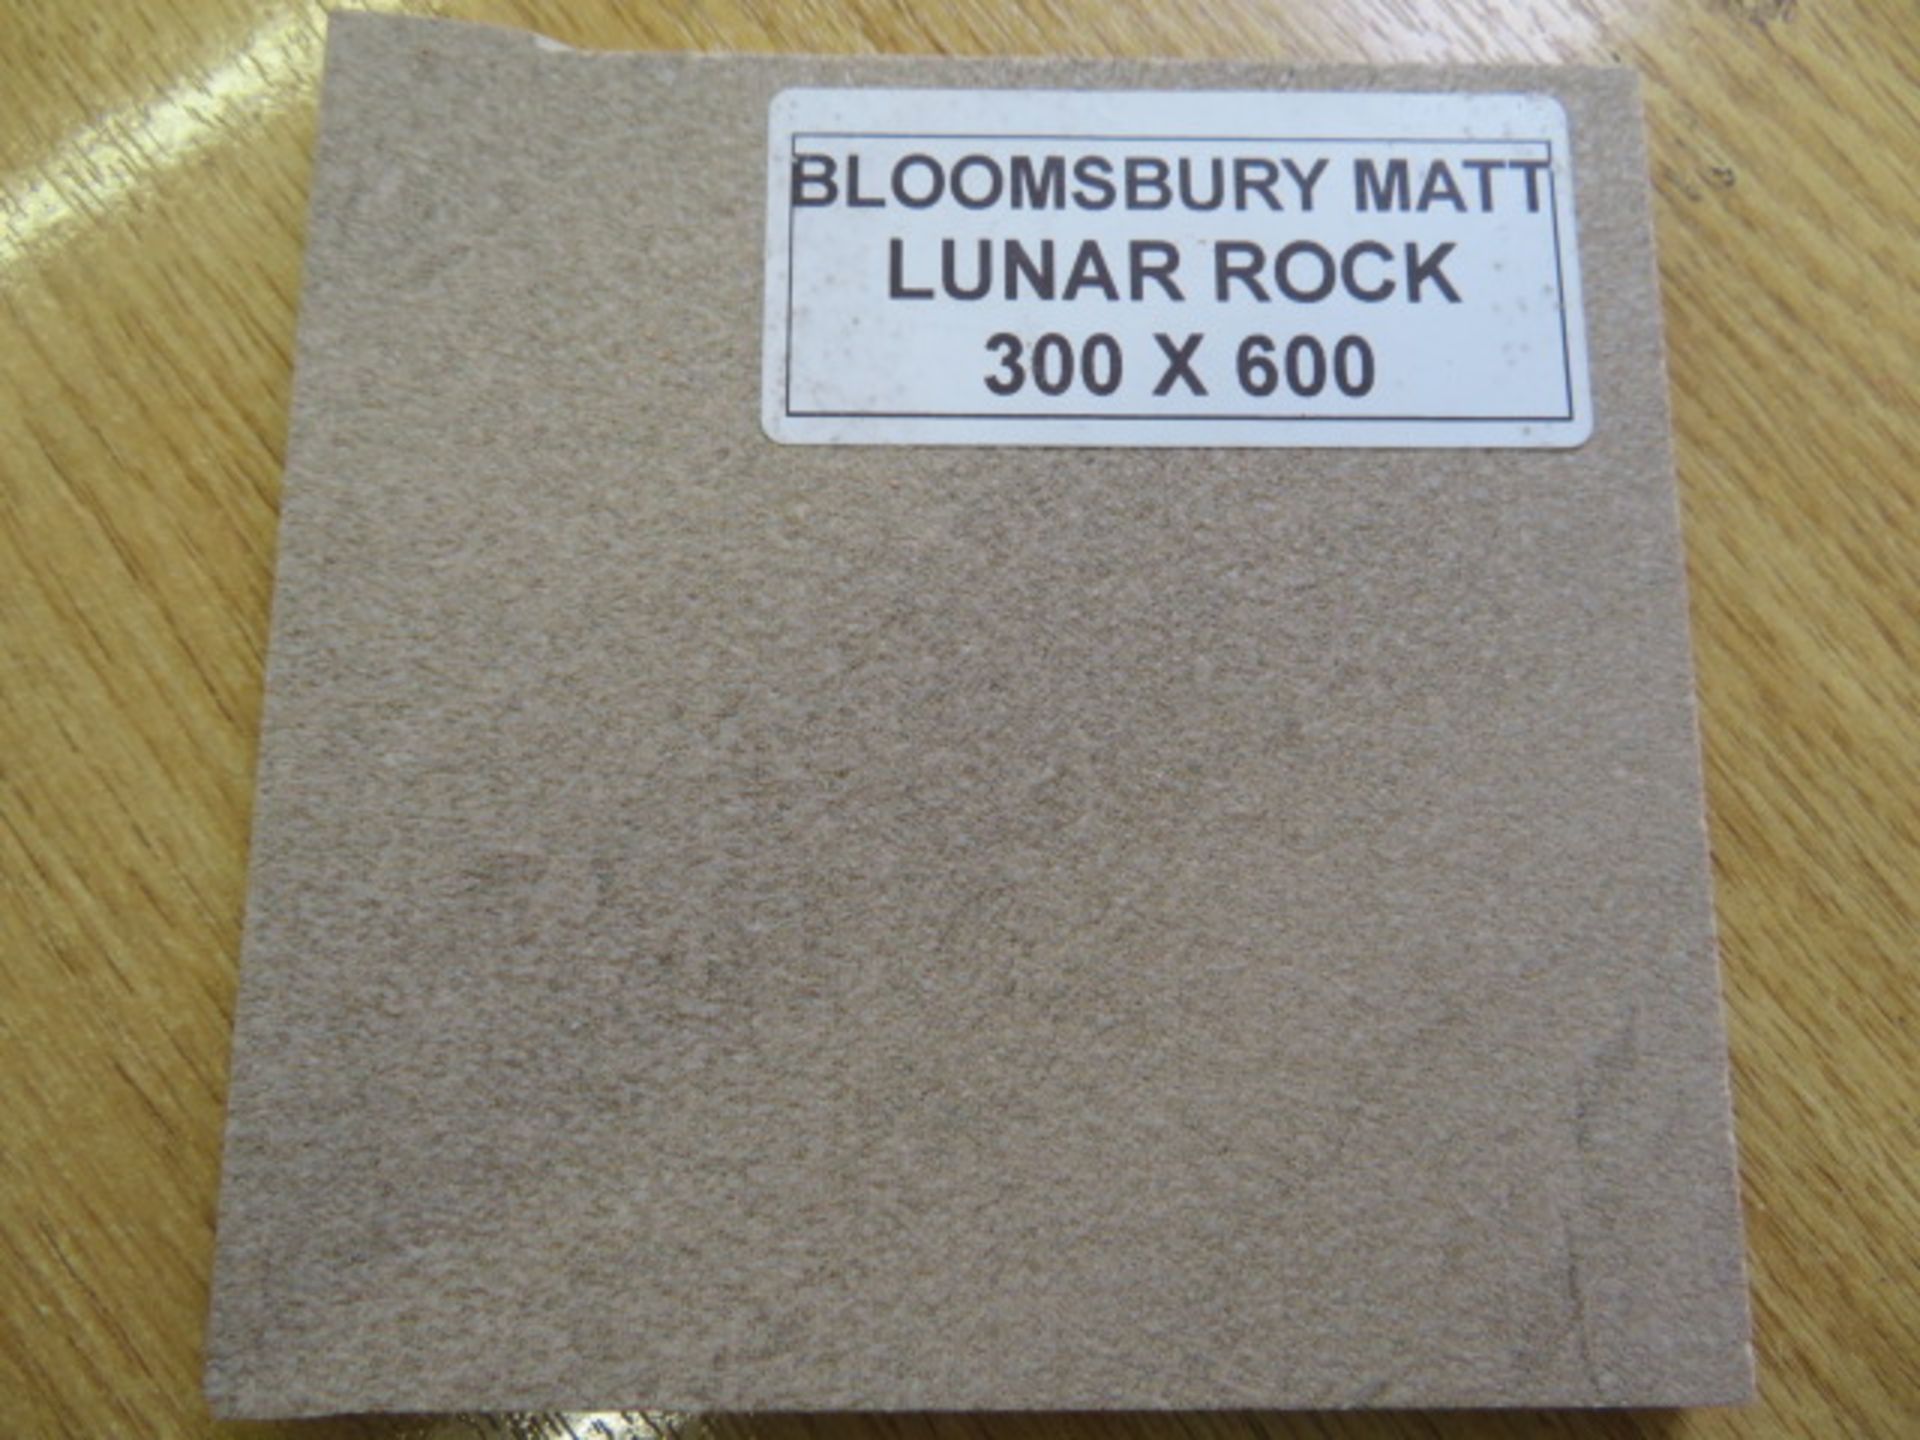 NEW 8.64m2 Bloomsbury Matte Lunar Rock Wall and Floor Tiles. 300x600mm per tile, 8.3mm thick ... - Bild 2 aus 2